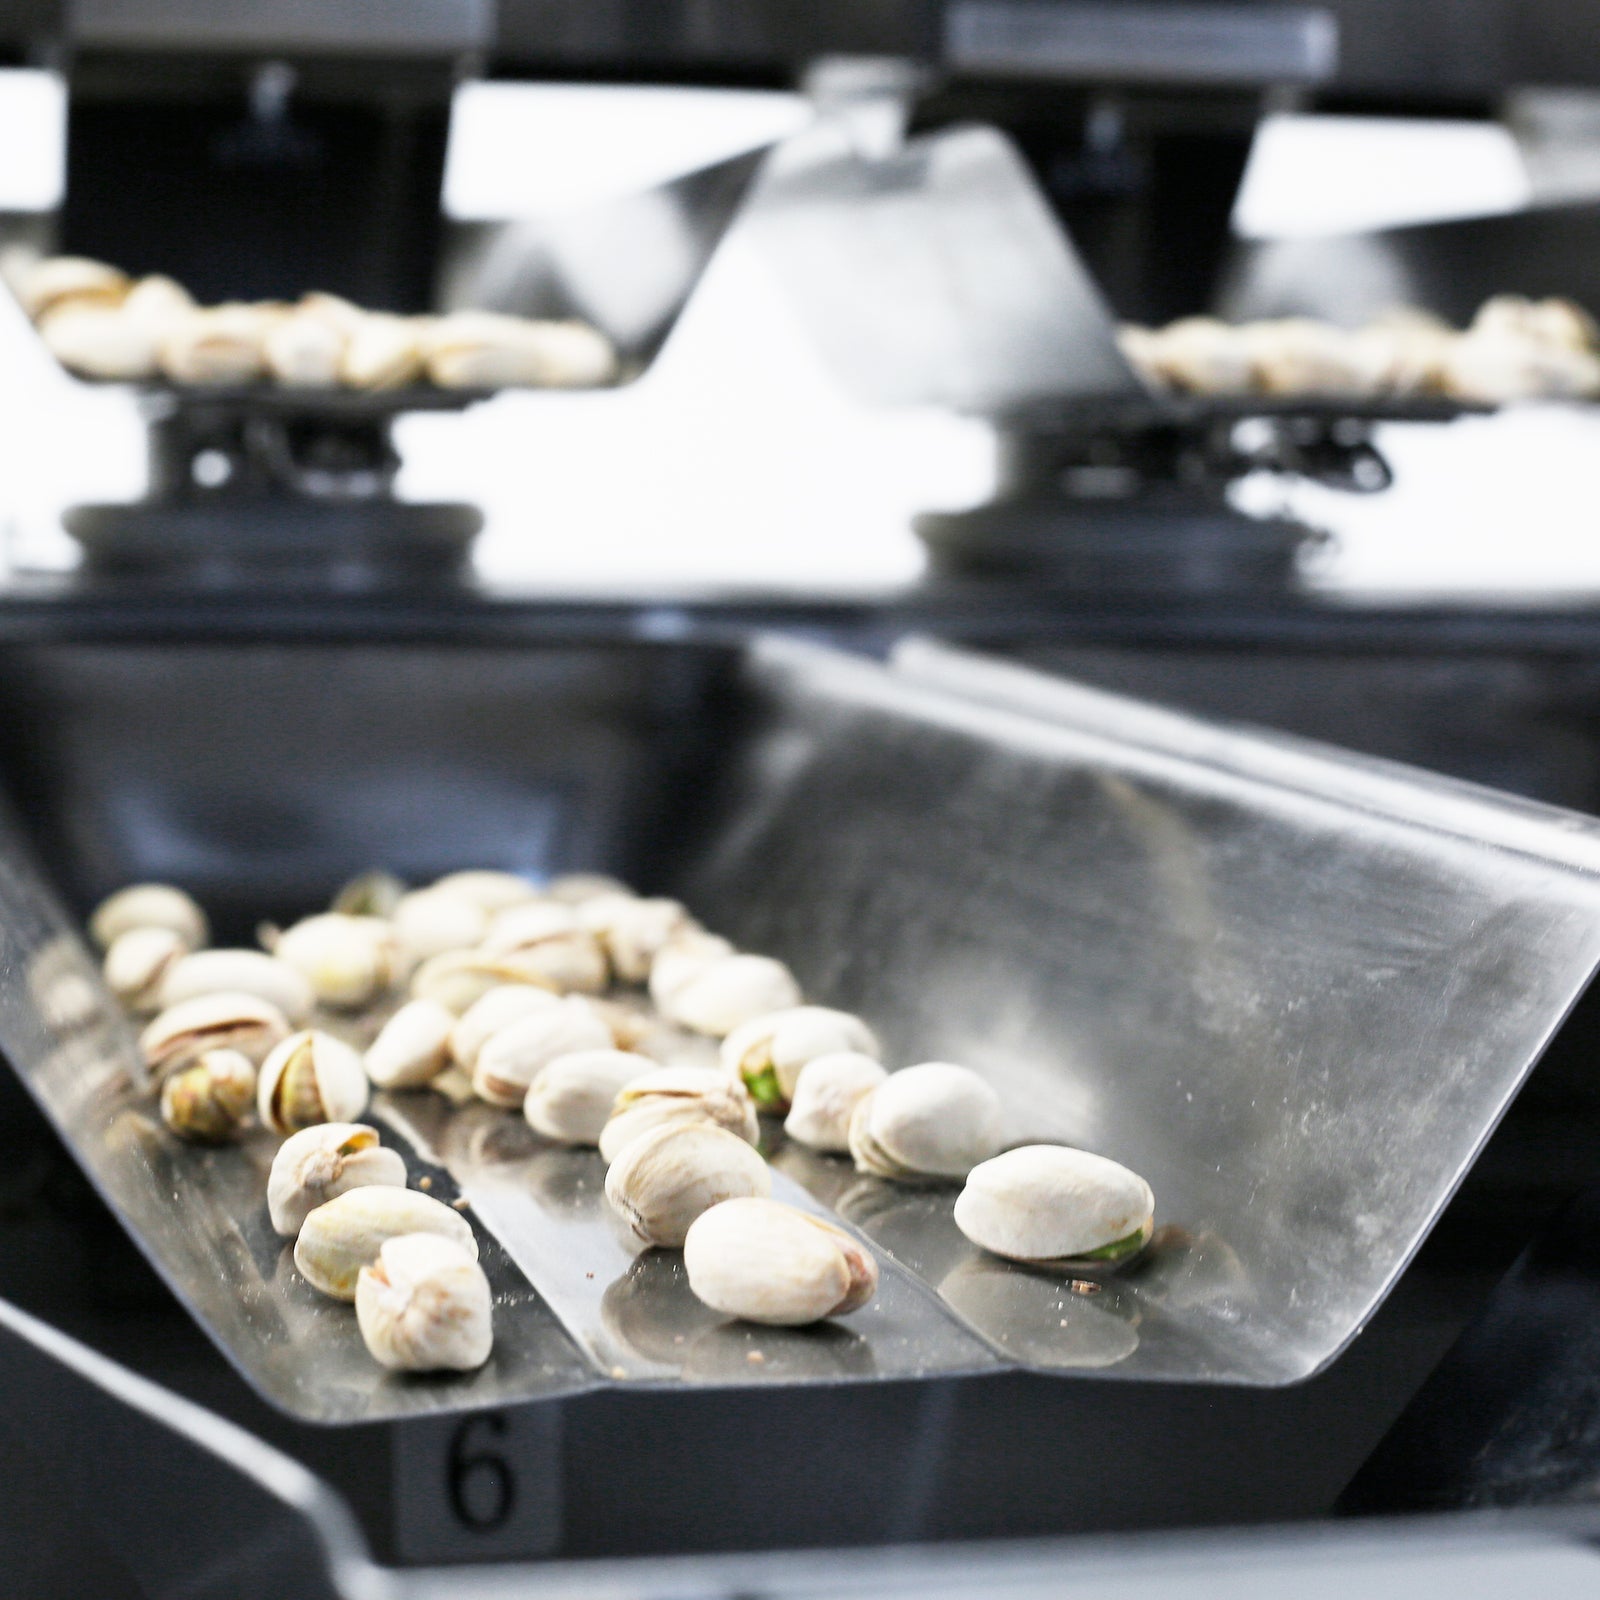 closeup of the JORES TECHNOLOGIES® linear weigher dispensing pistachios